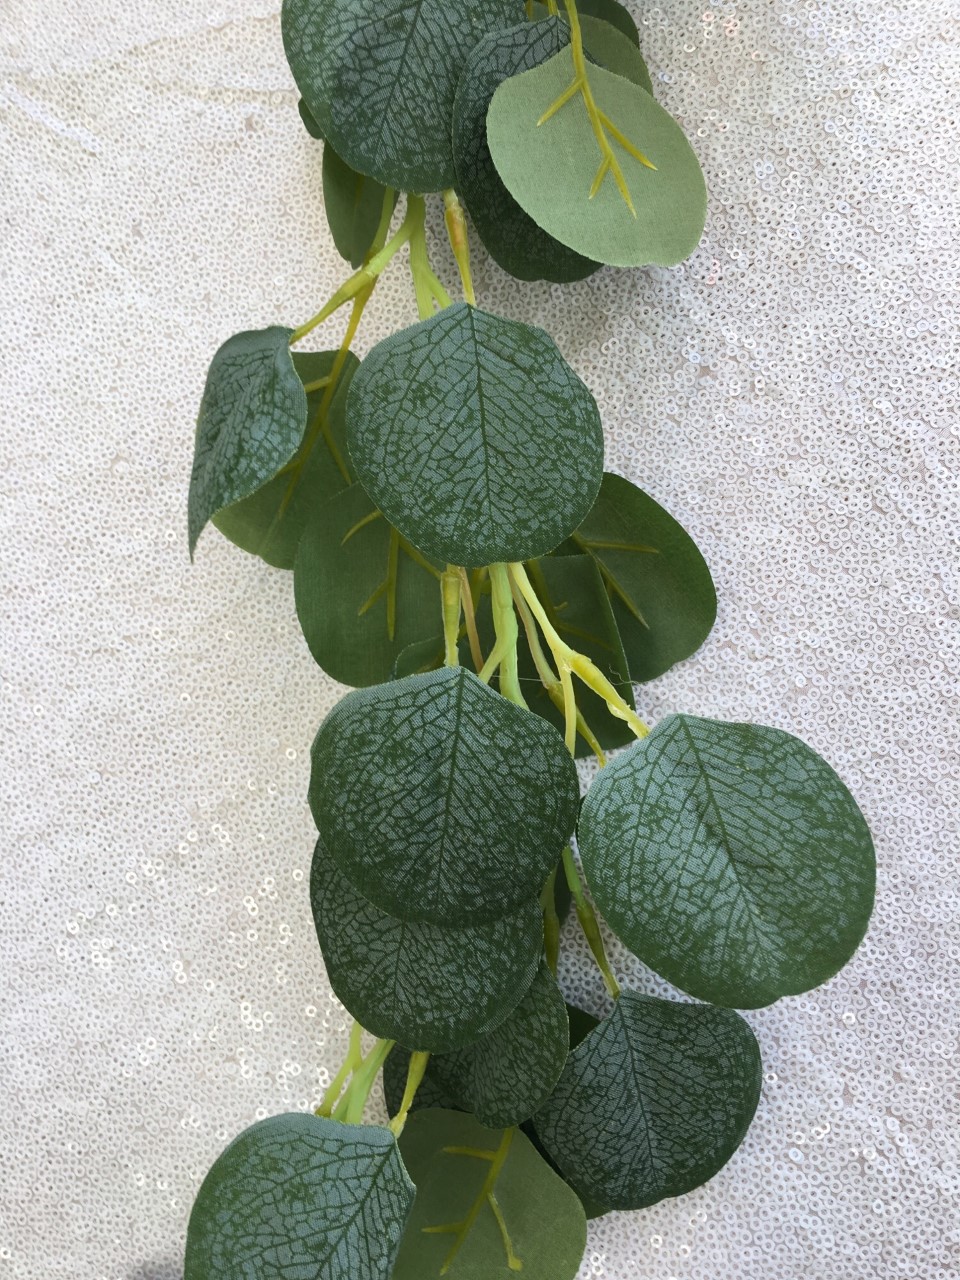 Vigne-d-eucalyptus-6.5-Vert-Py-le.jpg